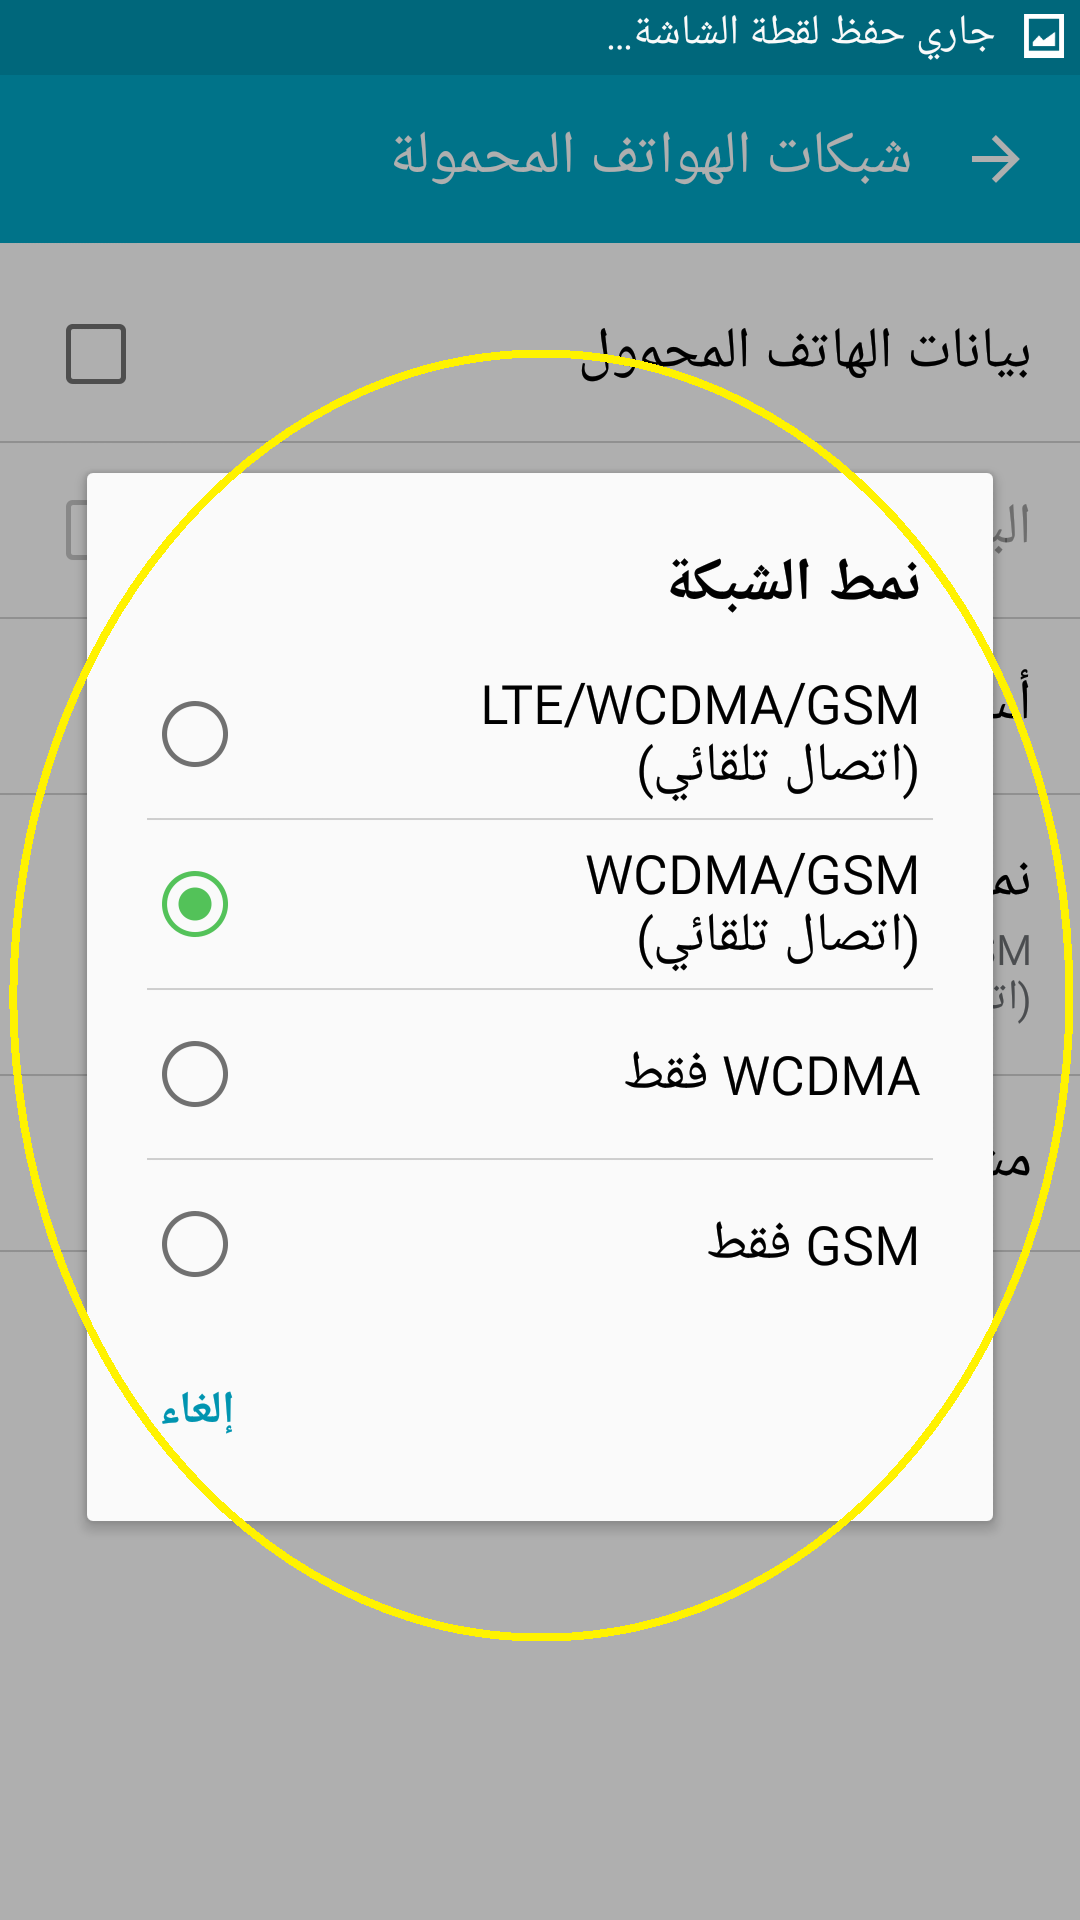 LTE/WCDMA/GSM, WCDMA/GSM, WCDMA, GSM